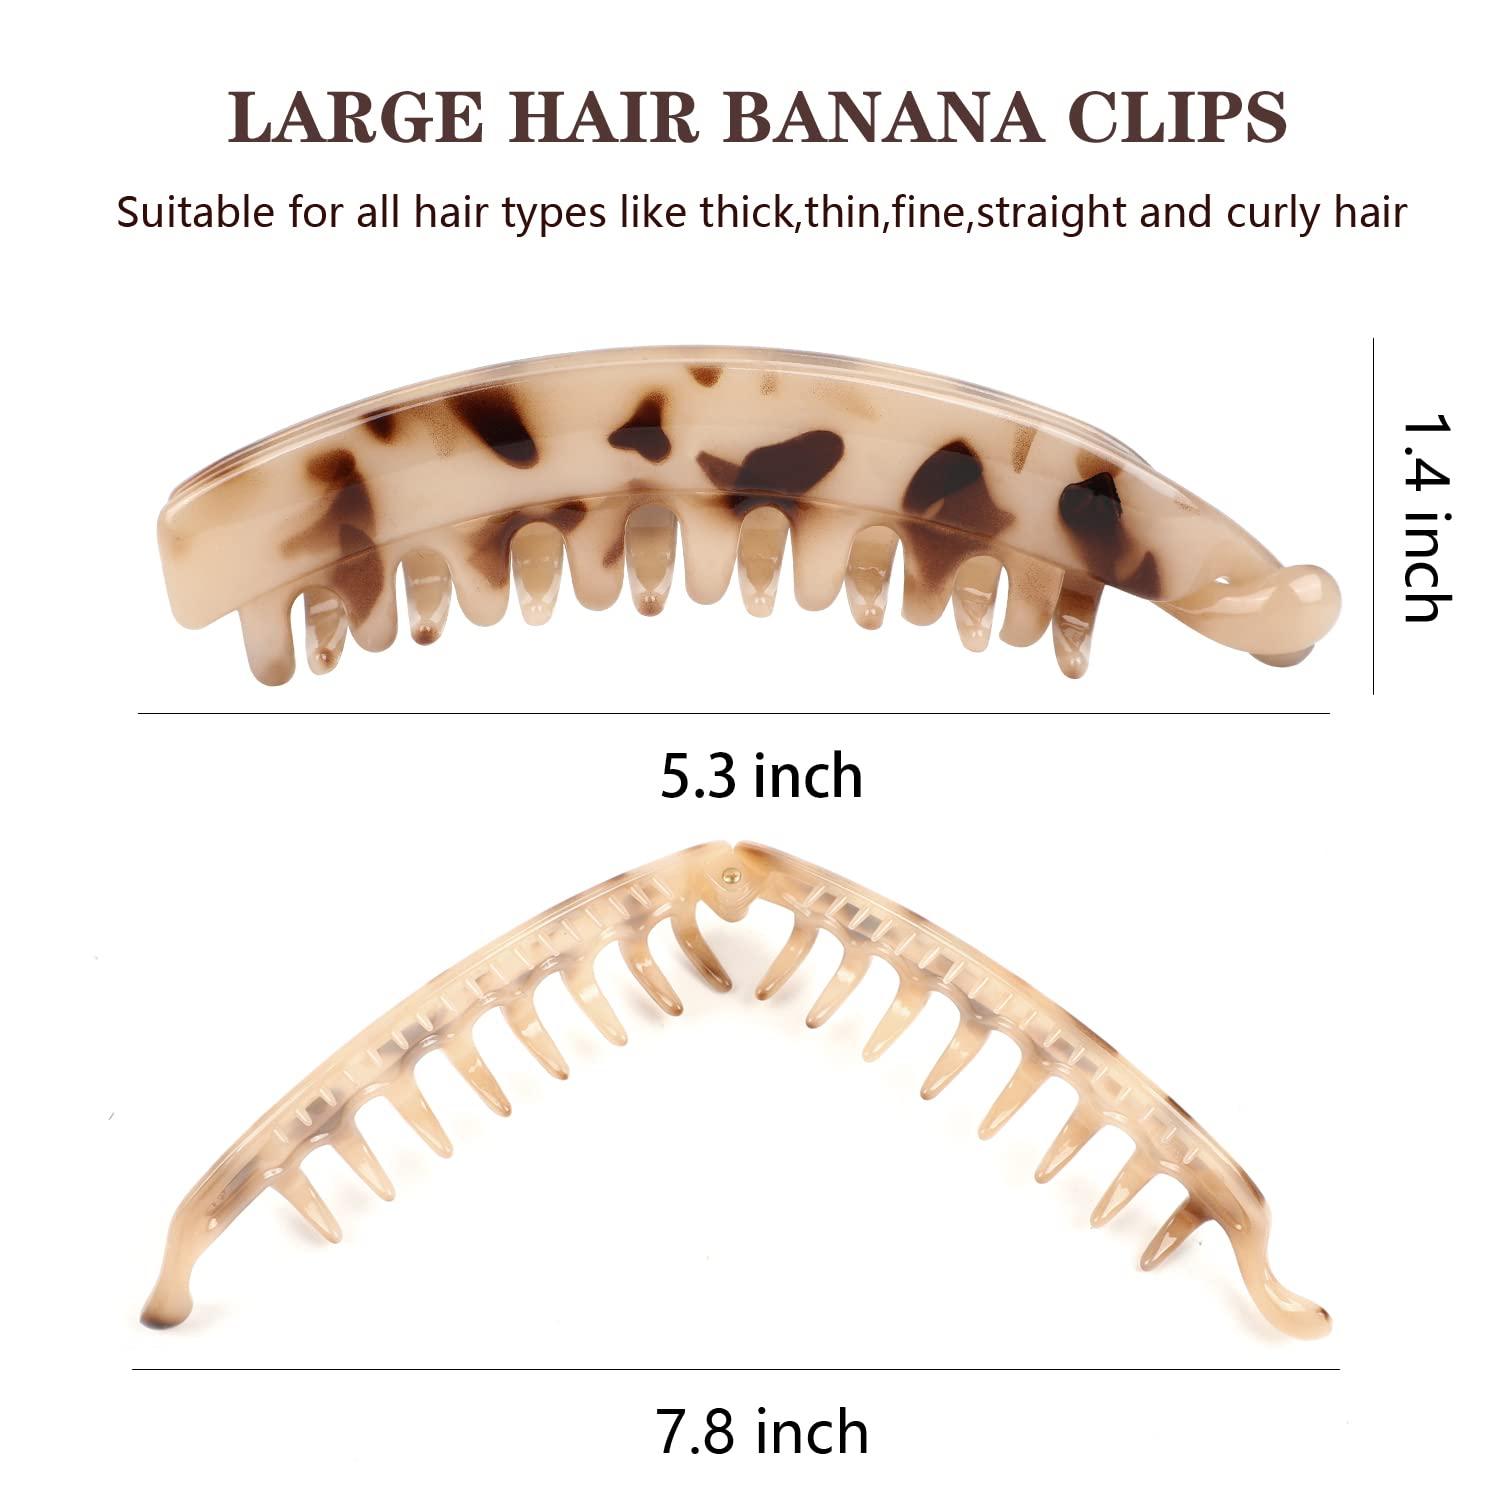 6 Pcs Large Banana Clip 5.3 Inch Banana Clips Hair for Thick Hair, Non-slip  Banana Hair Clips for Fine Hair, Strong Hold Banana Clips for Women and